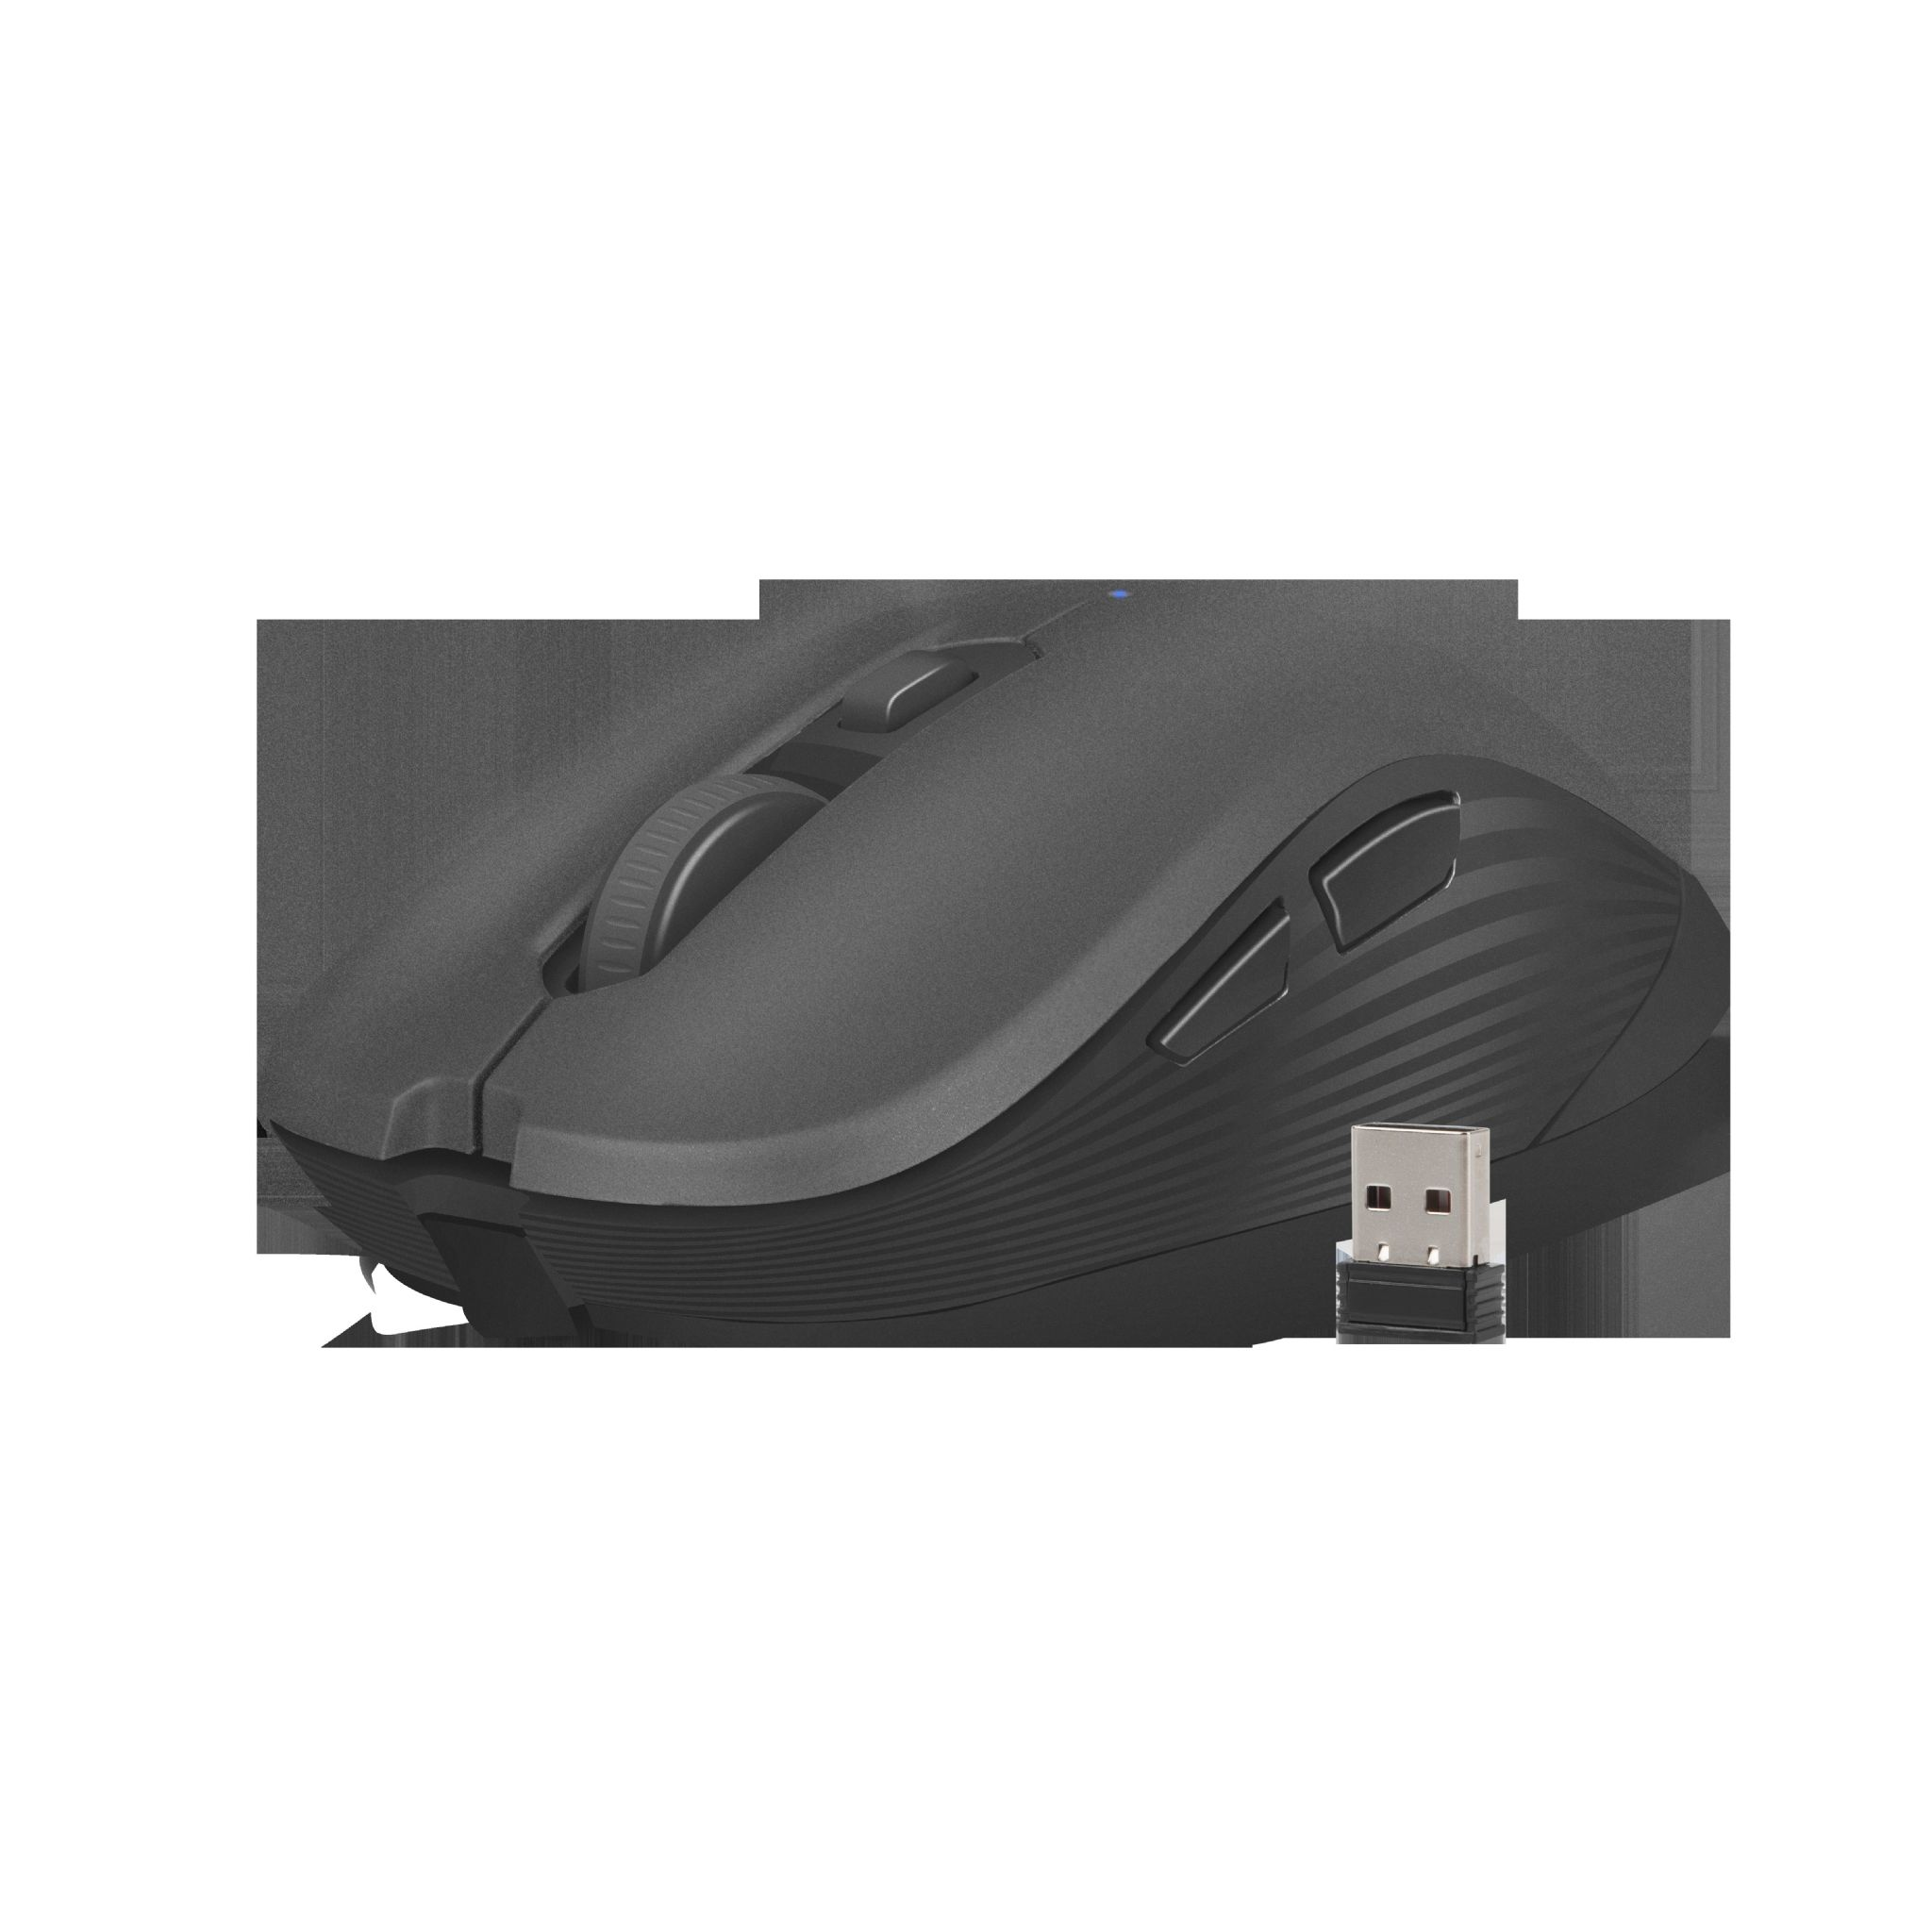 NATEC Kabellose Maus 1600 Black DPI Robin Desktop-Set